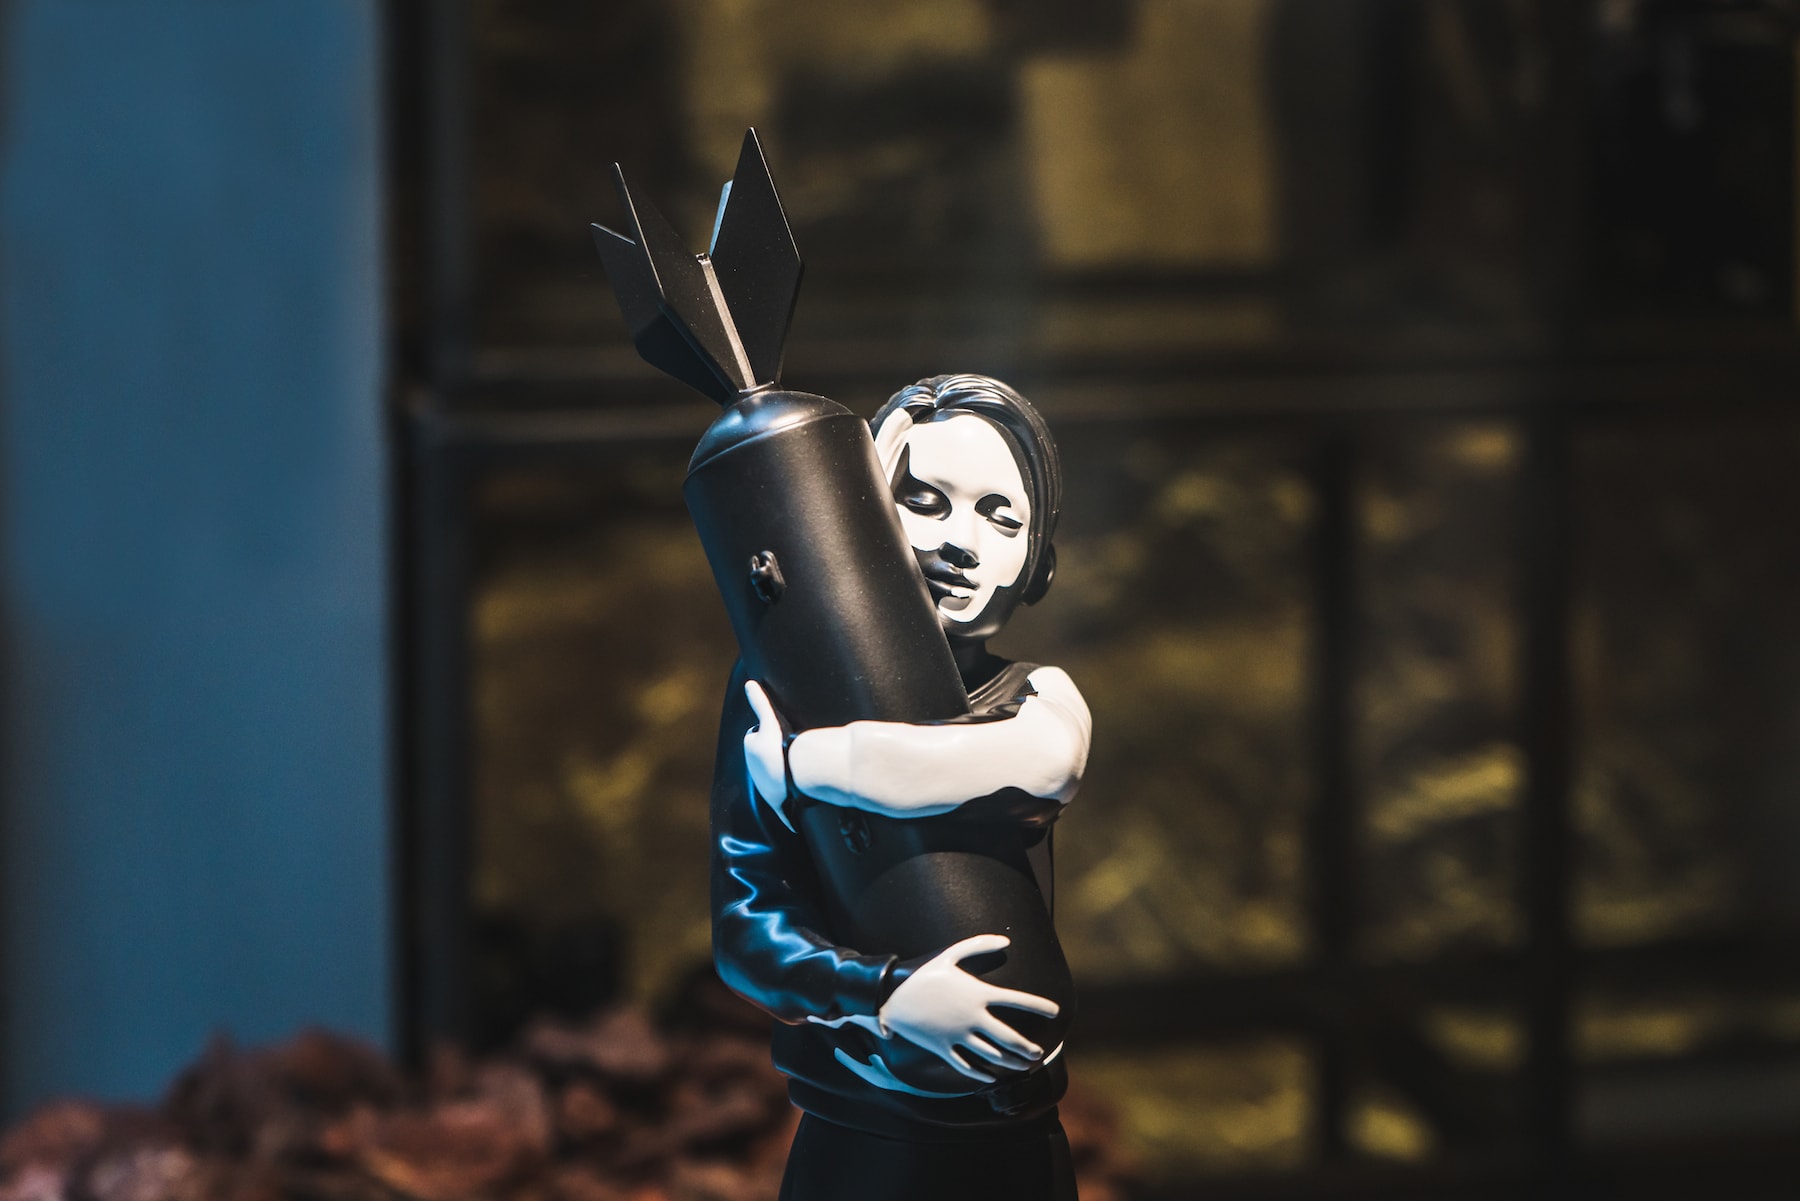 Medicom Toy x Brandalism x Banksy 全新「Bomb Hugger」雕塑上架